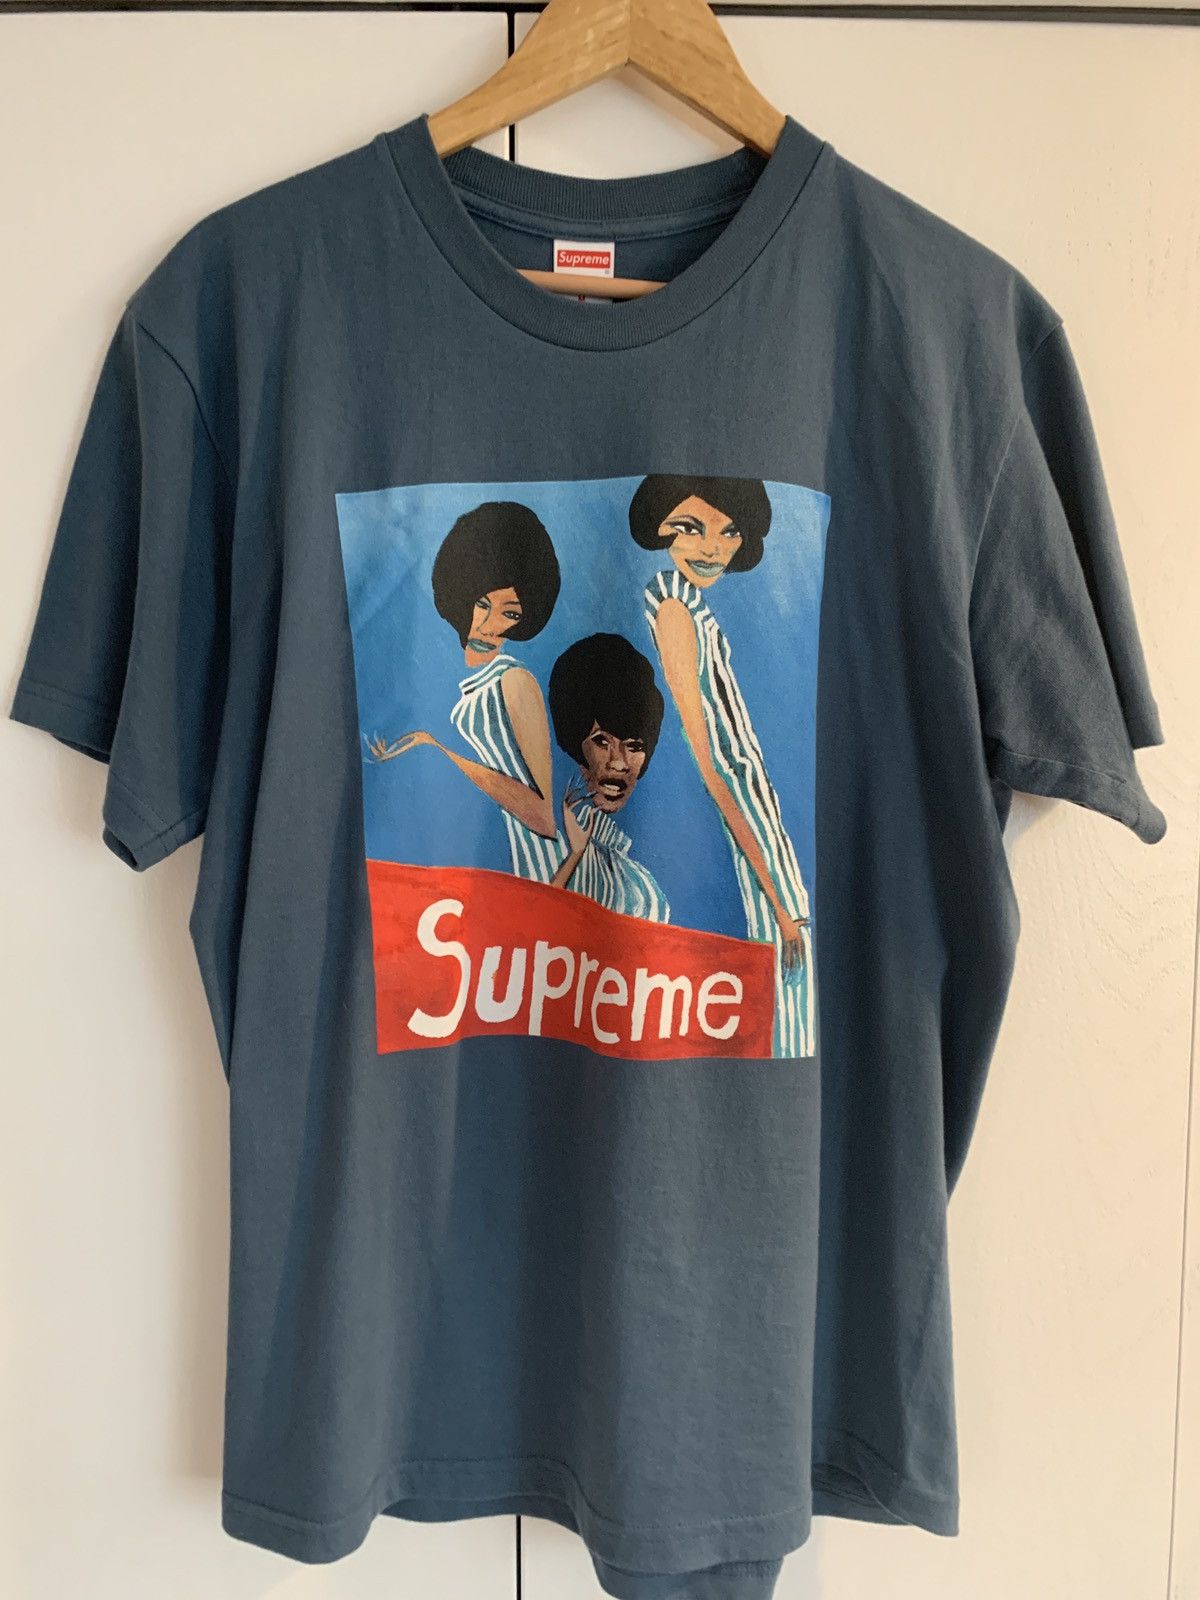 Mens Supreme Shirt, Supreme Clothing, Diana Ross Shirt, Supreme Men's